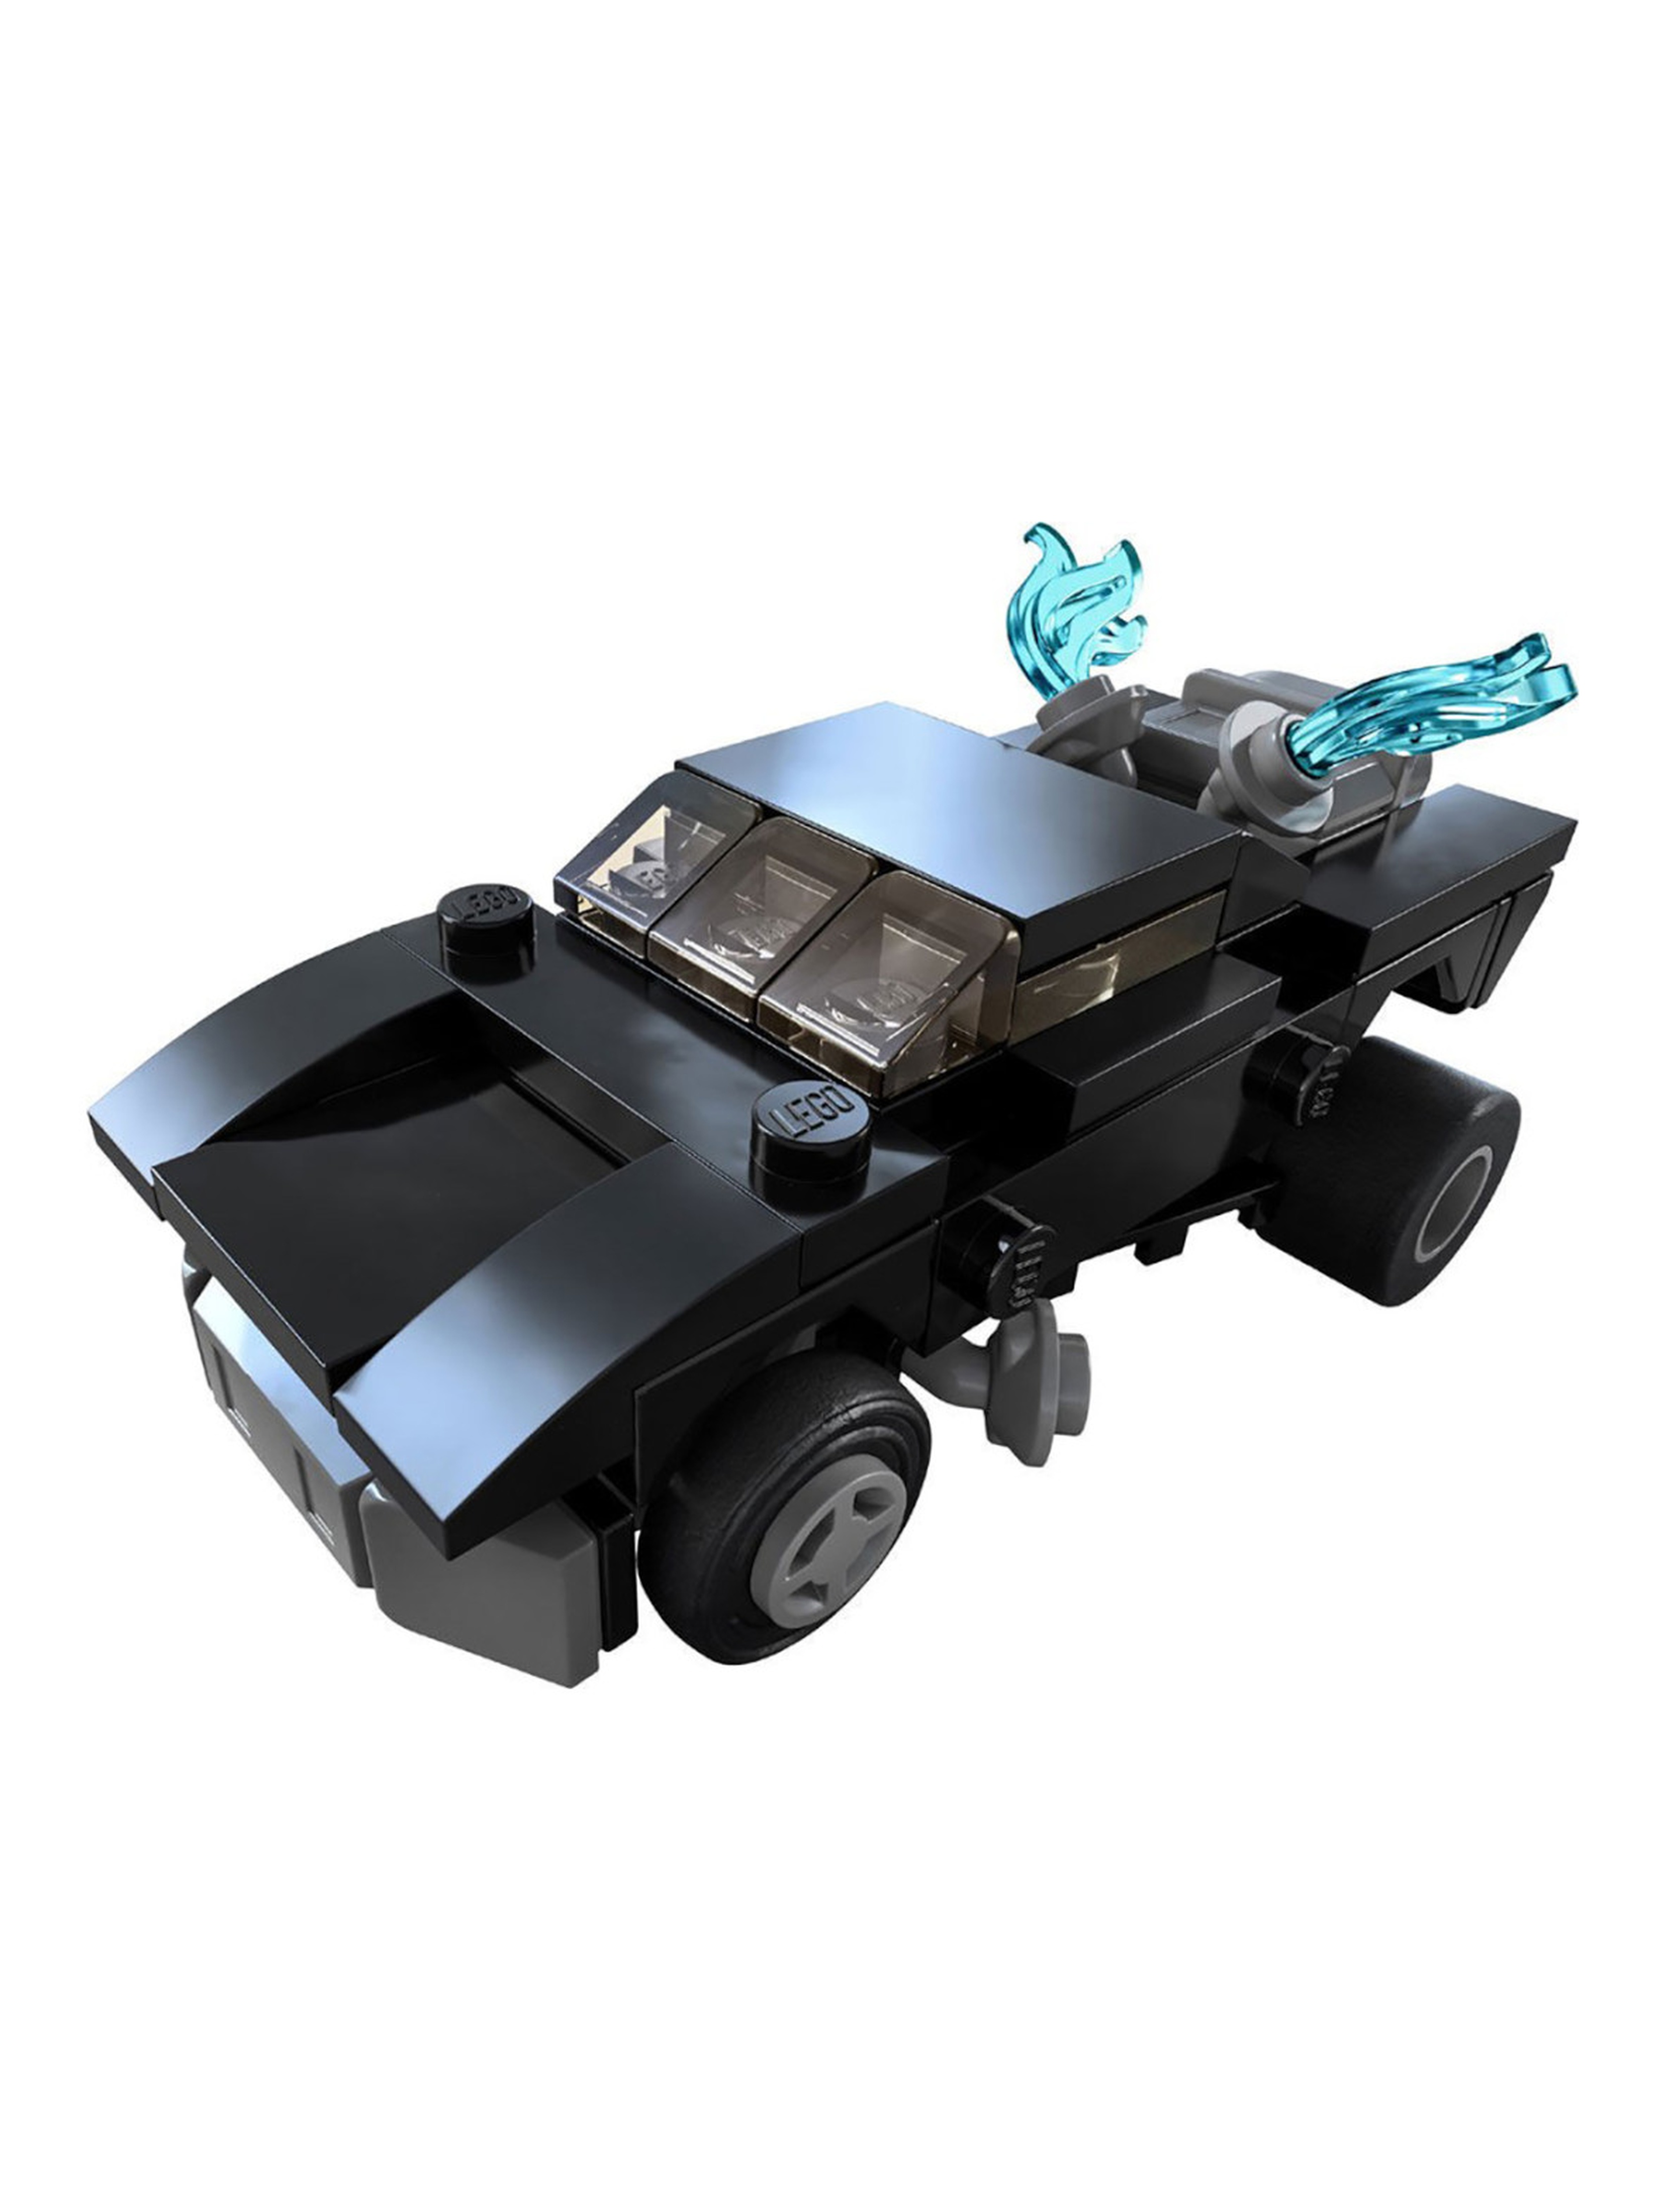 Klocki LEGO Super Heroes 30455 Batmobil - 68 elementów, wiek 0 +